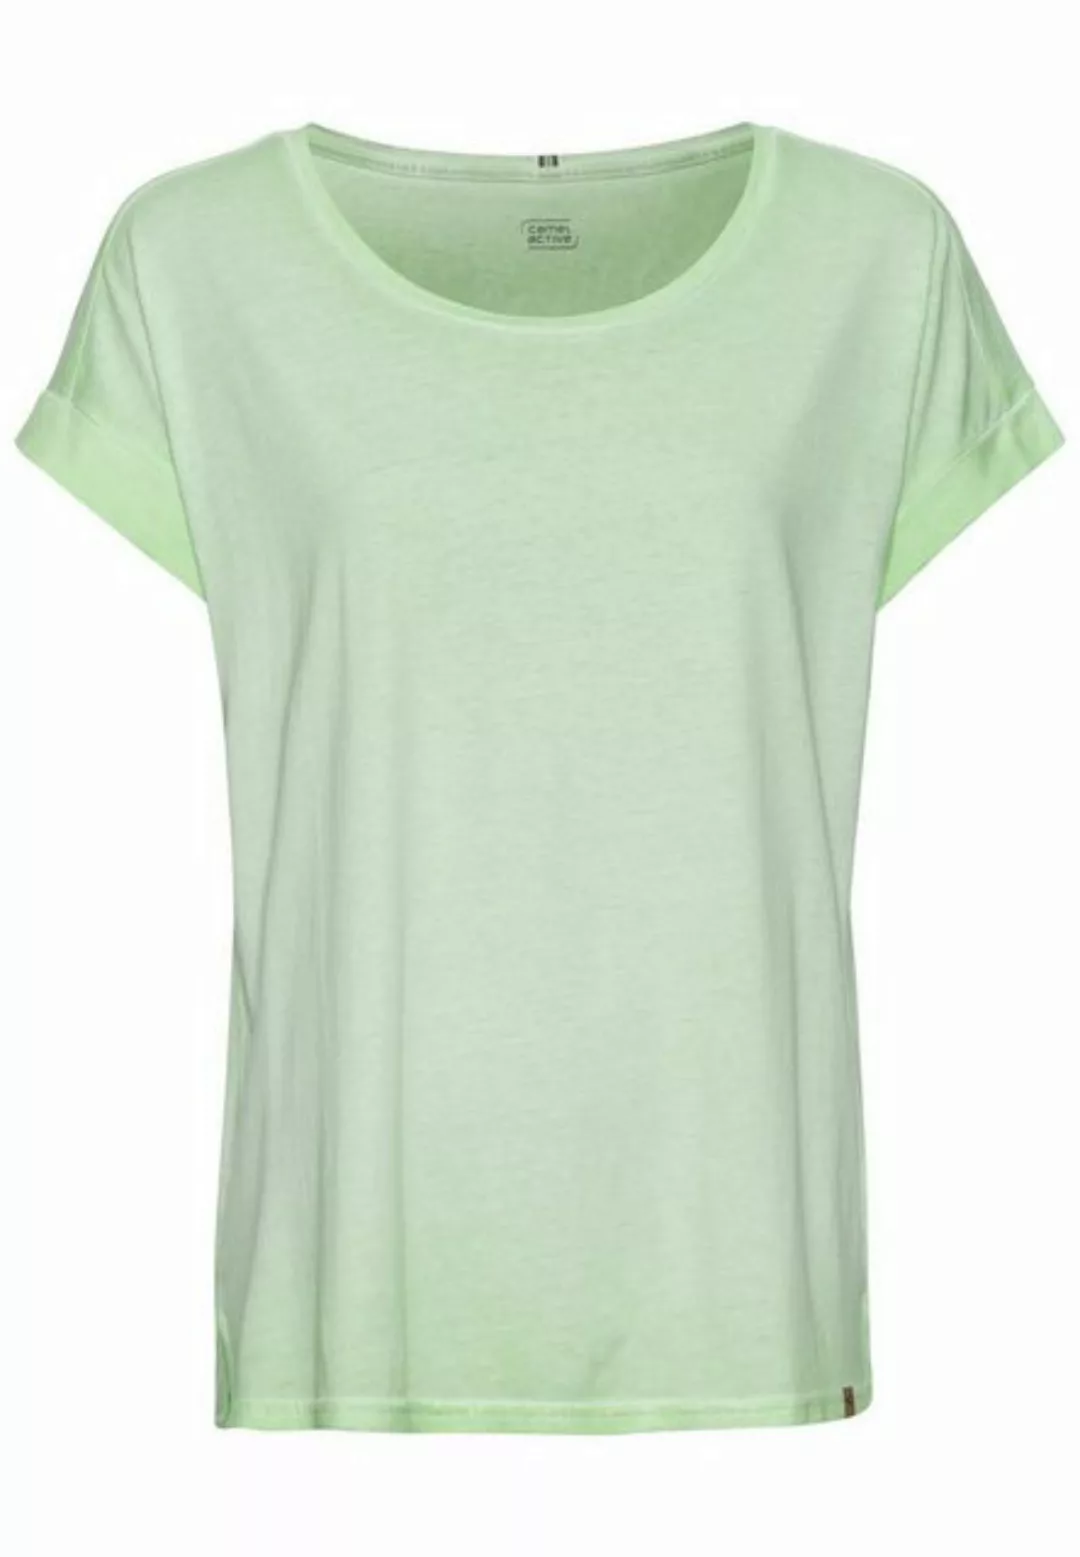 camel active T-Shirt aus softem Modal-Baumwollmix günstig online kaufen